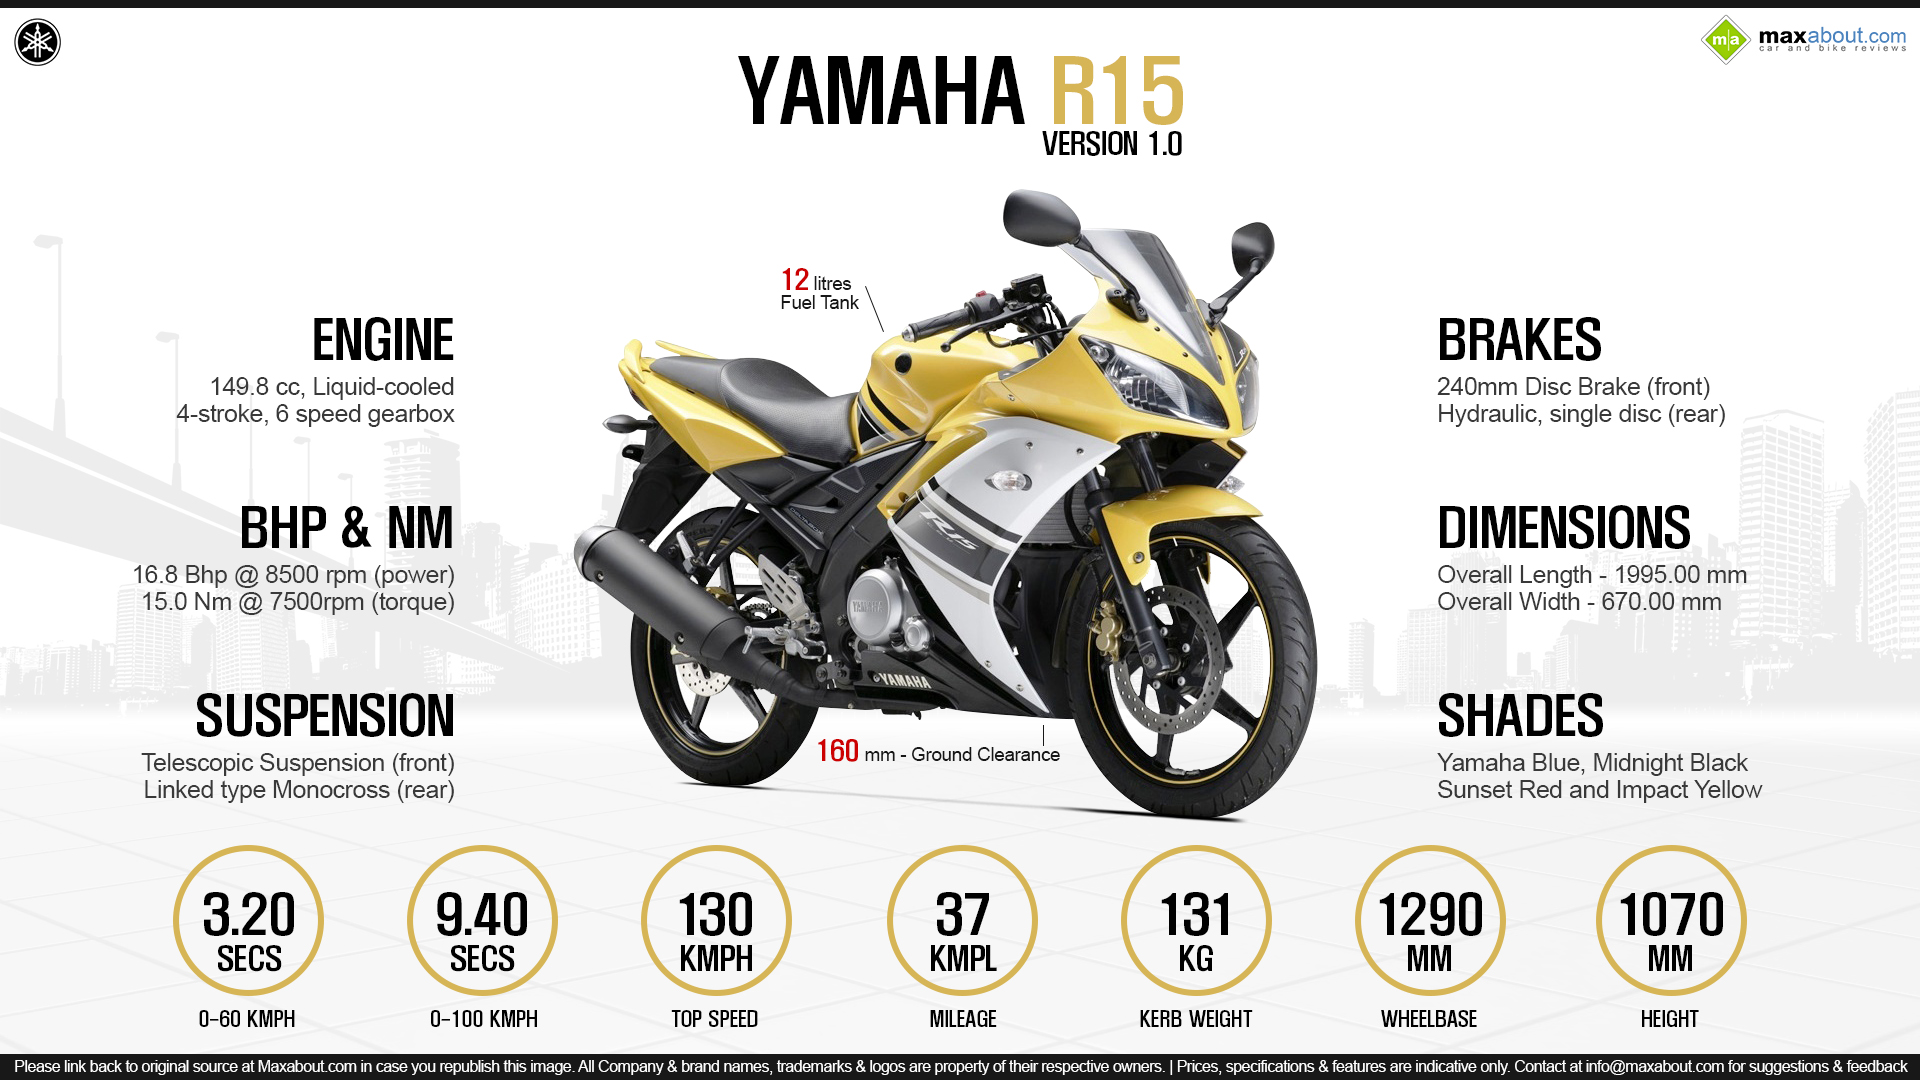 Quick Facts - Yamaha R15 Version 1.0